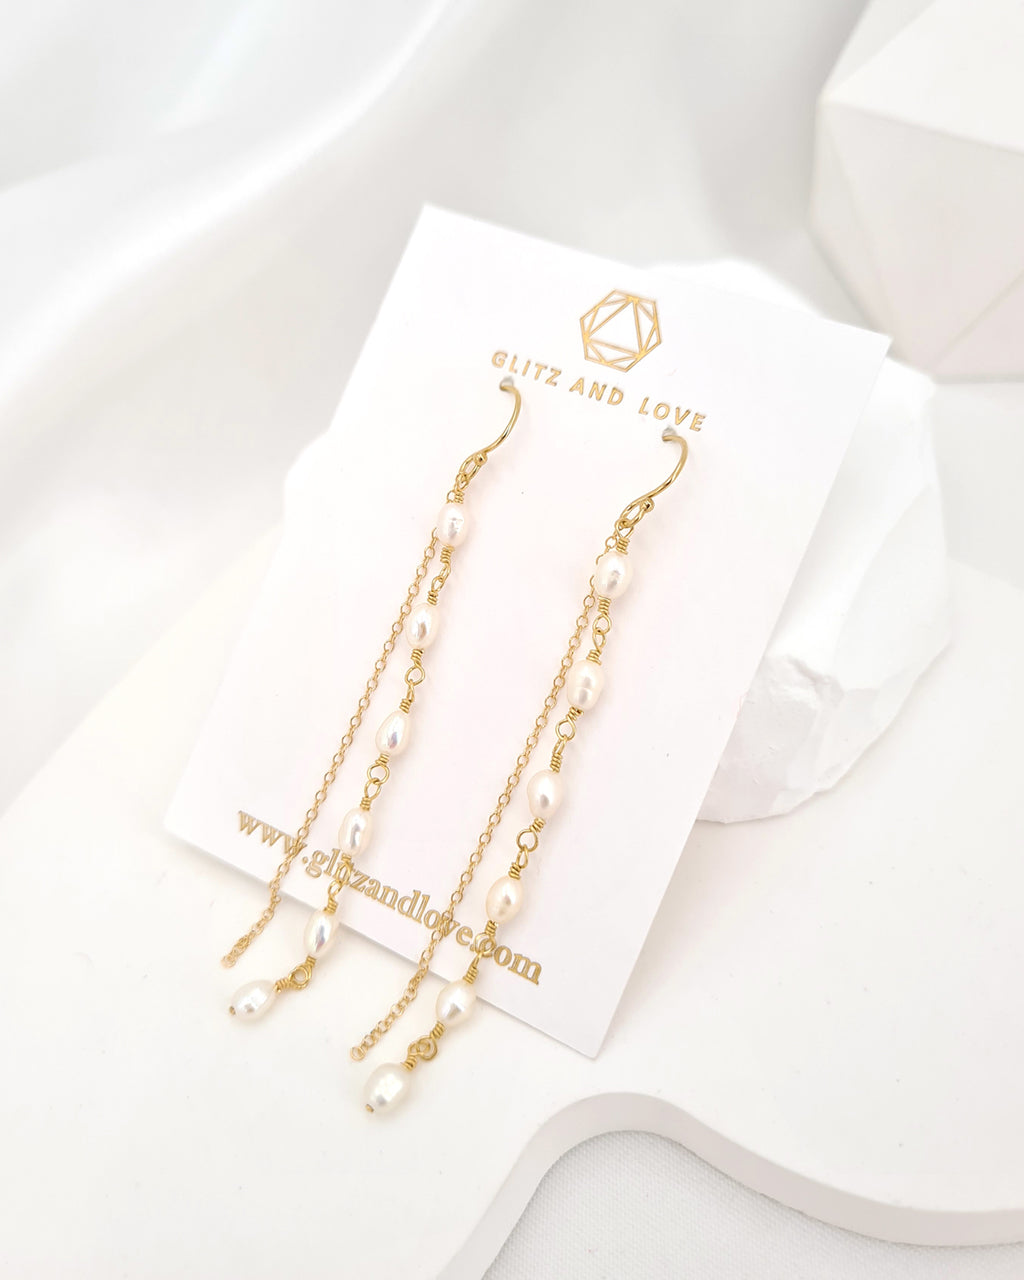 Tiny Pearl Long Earrings, Freshwater Pearl Earrings 14k gold filled jewelry handmade in Singapore